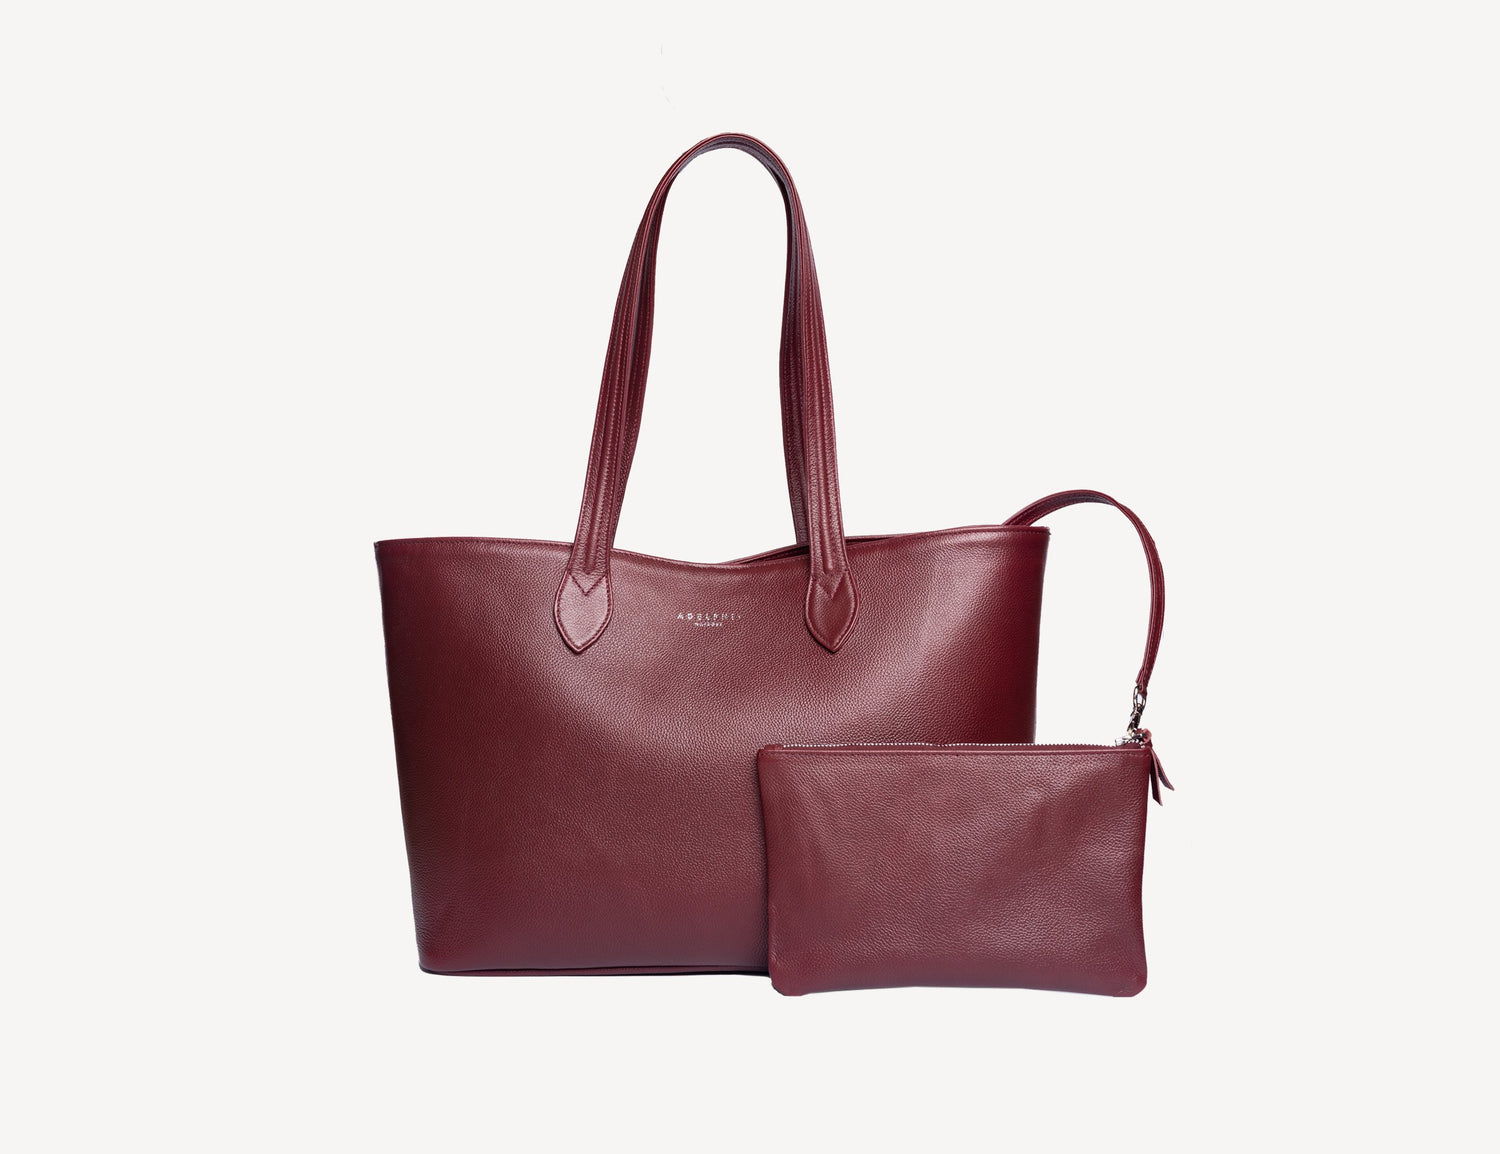 Classic Duffle Bag | Duffle Bags | Travel Bags | Adelphi Kenya